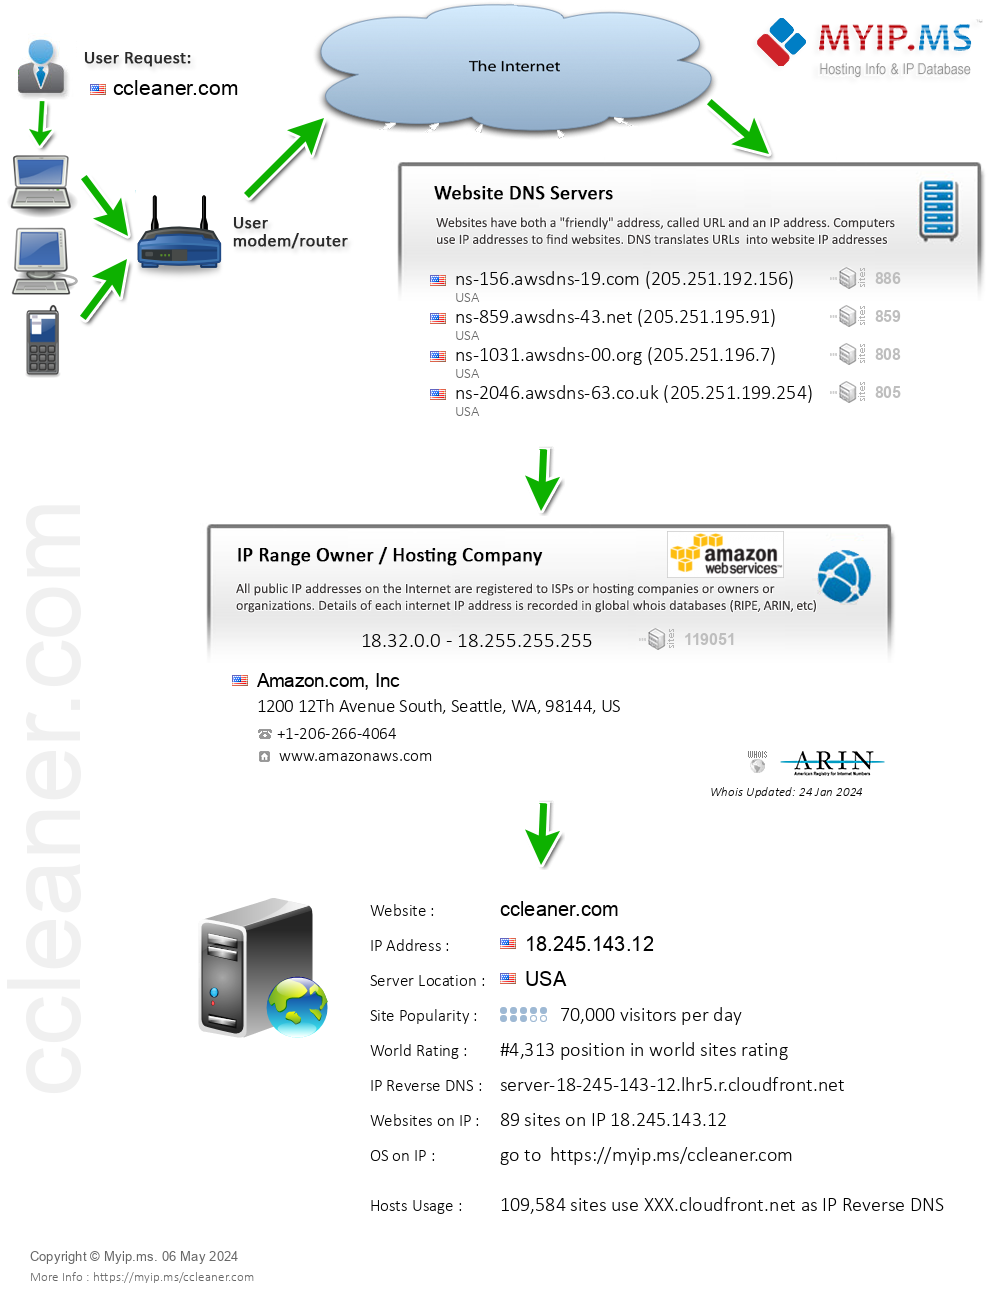 Ccleaner.com - Website Hosting Visual IP Diagram